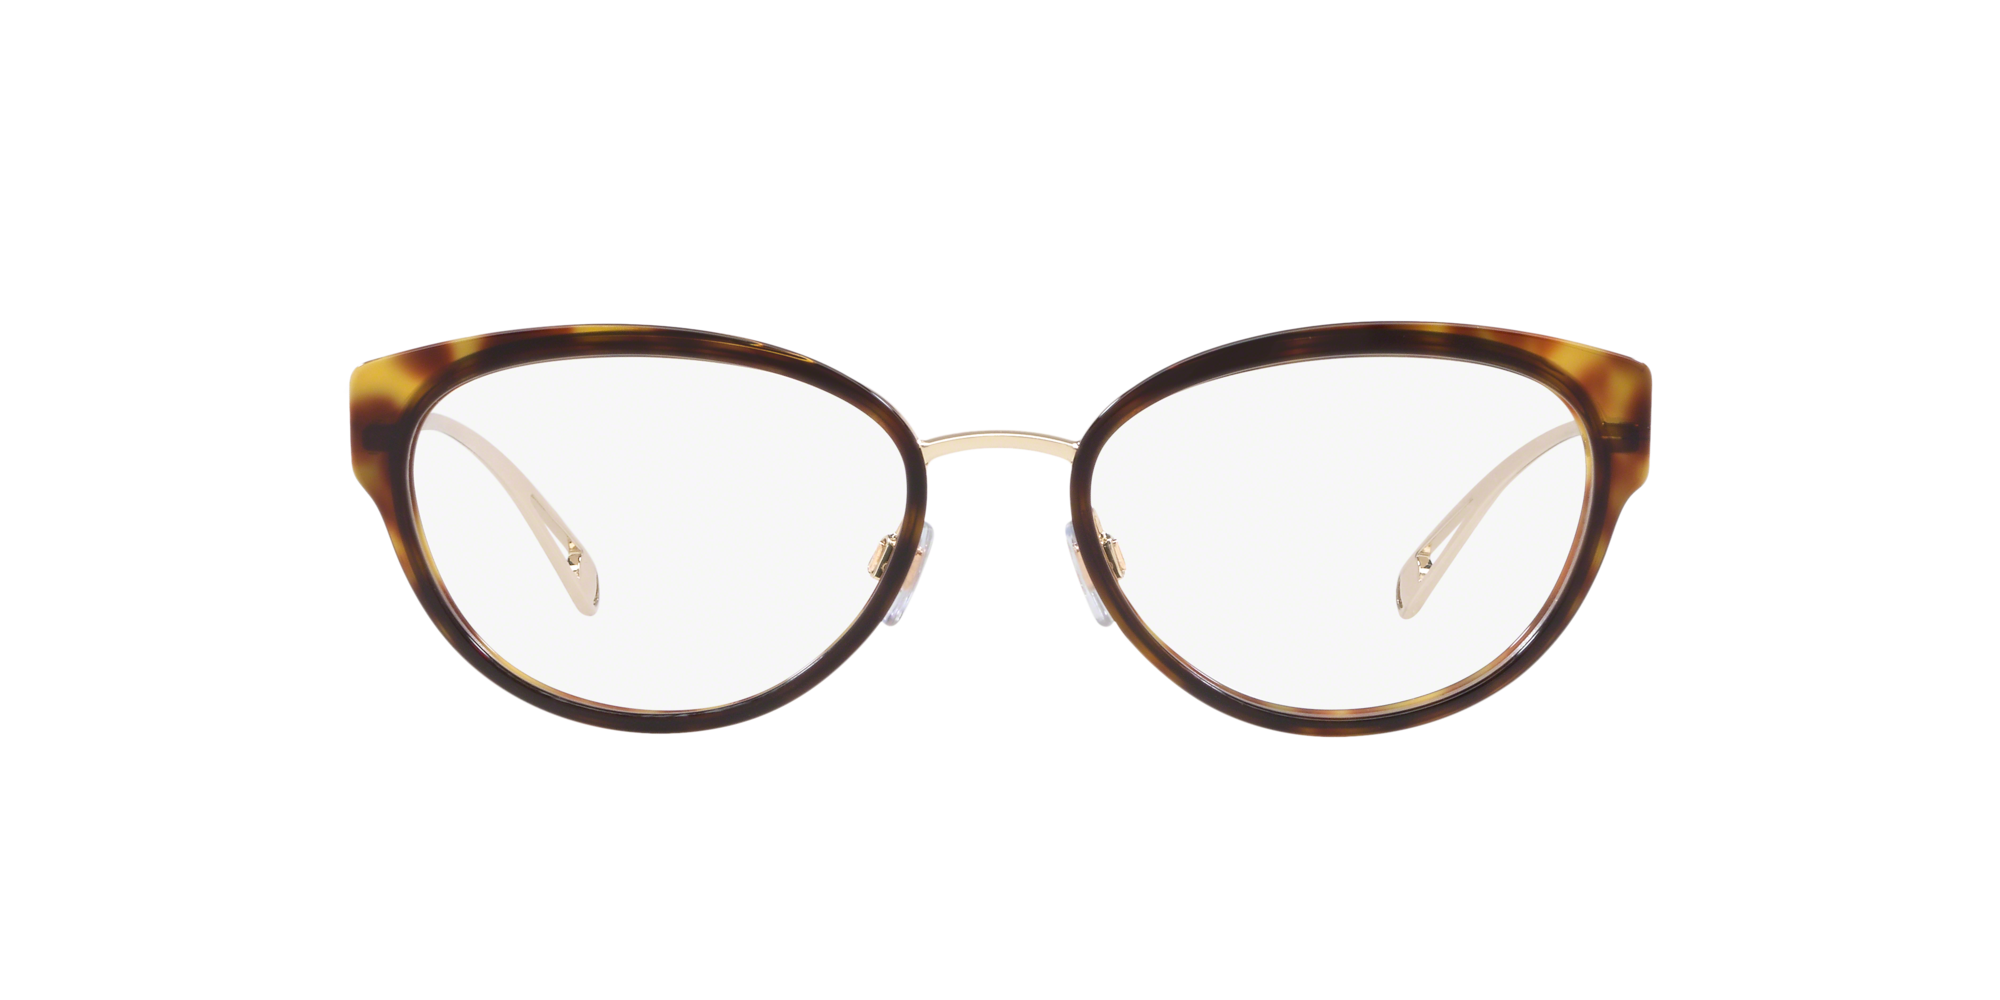 giorgio armani frames lenscrafters